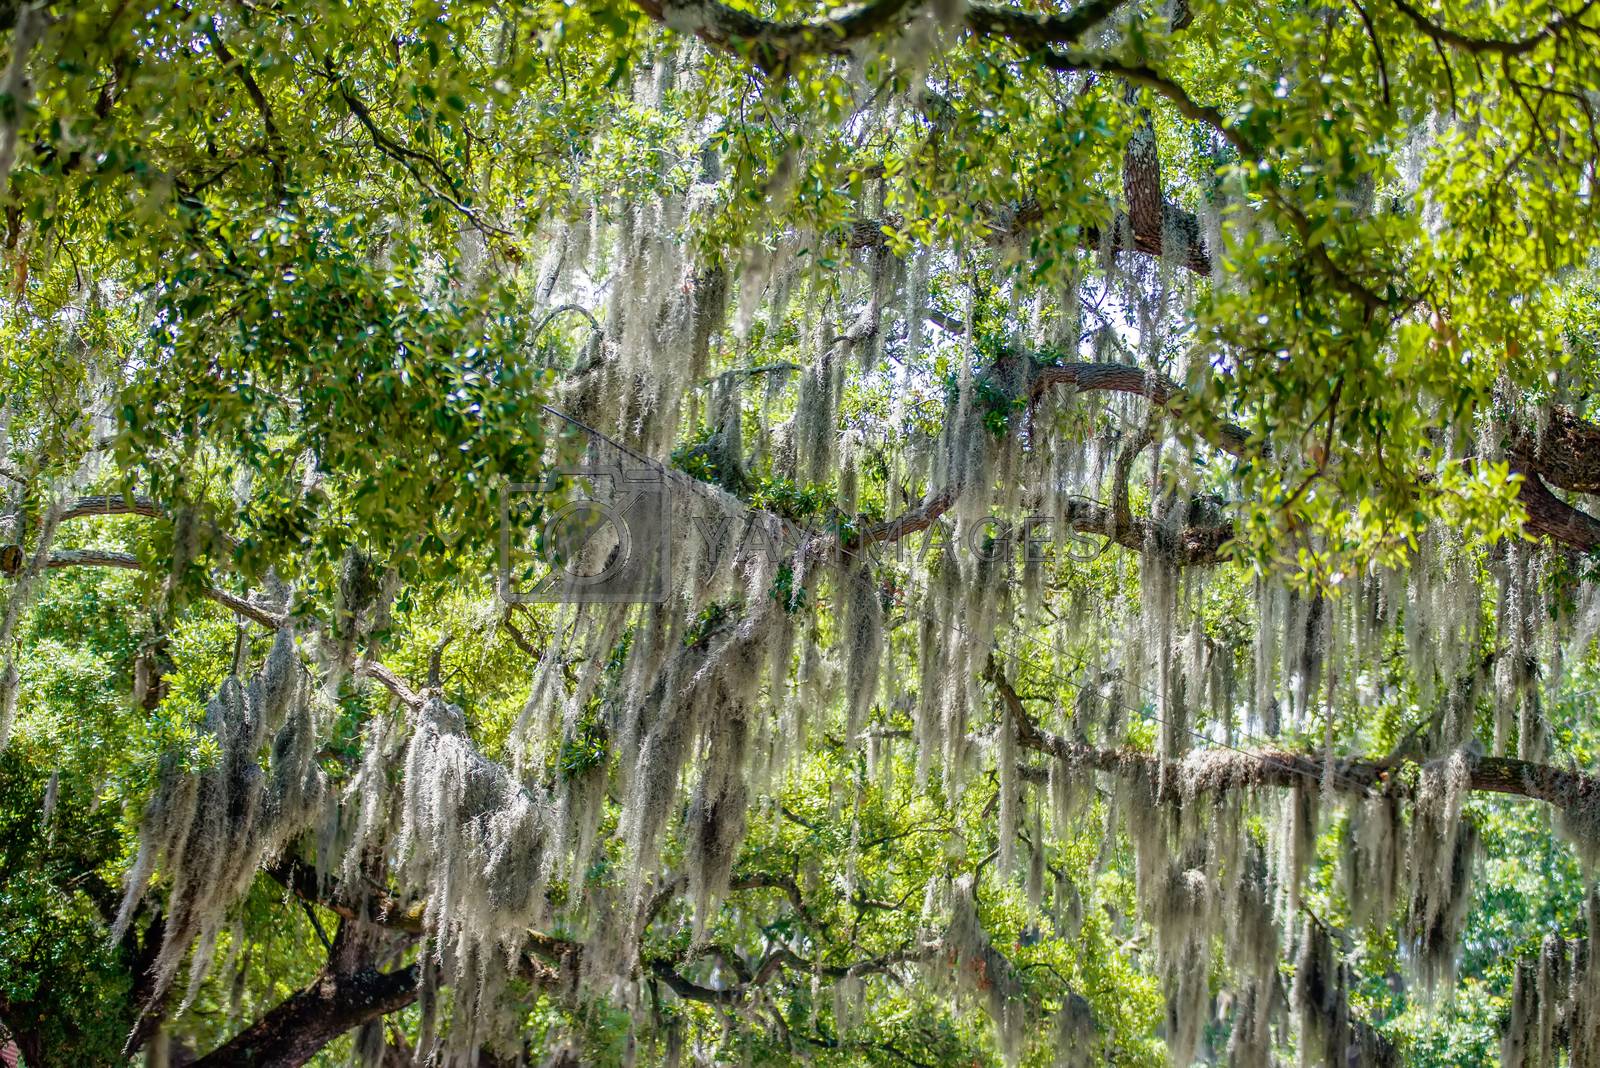 Royalty free image of Savannah Georgia  oak tree lined streets by digidreamgrafix